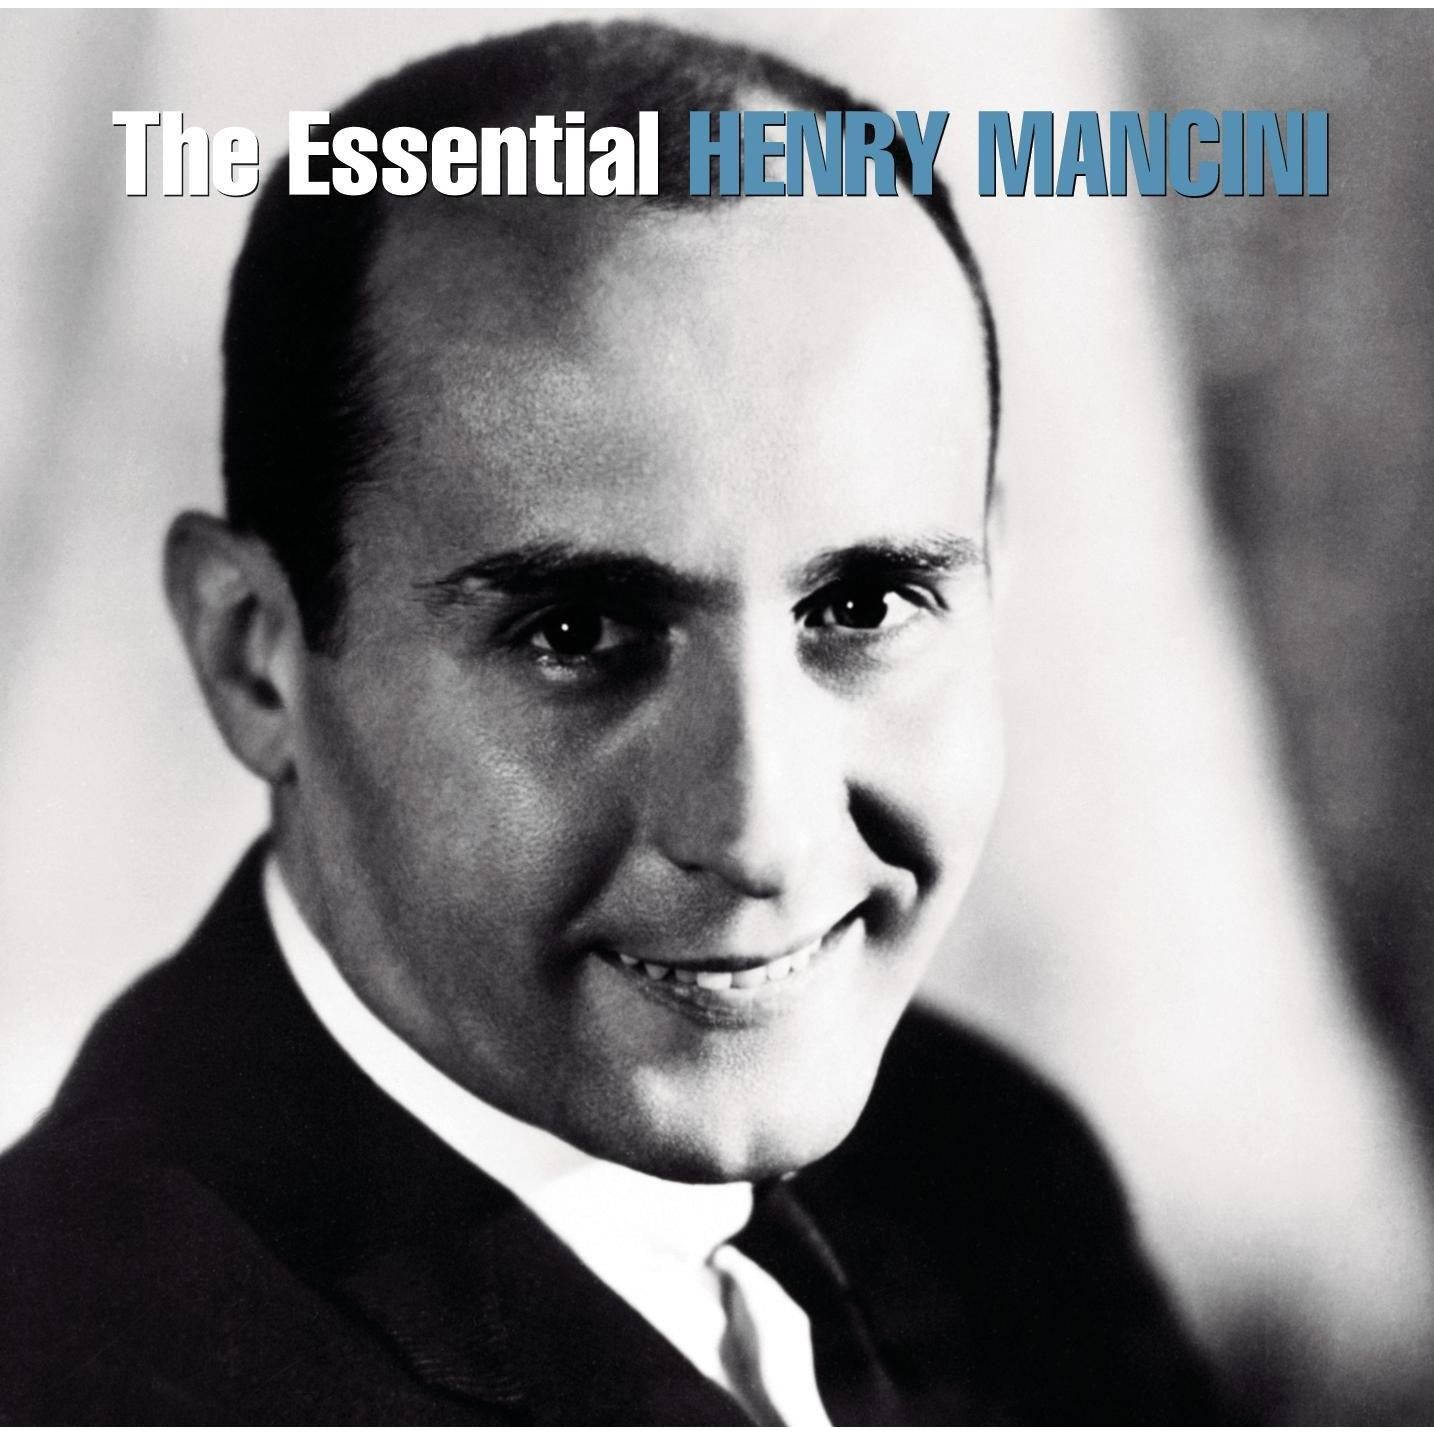 Denessentiella Henry Mancini-albumet 2014. Wallpaper